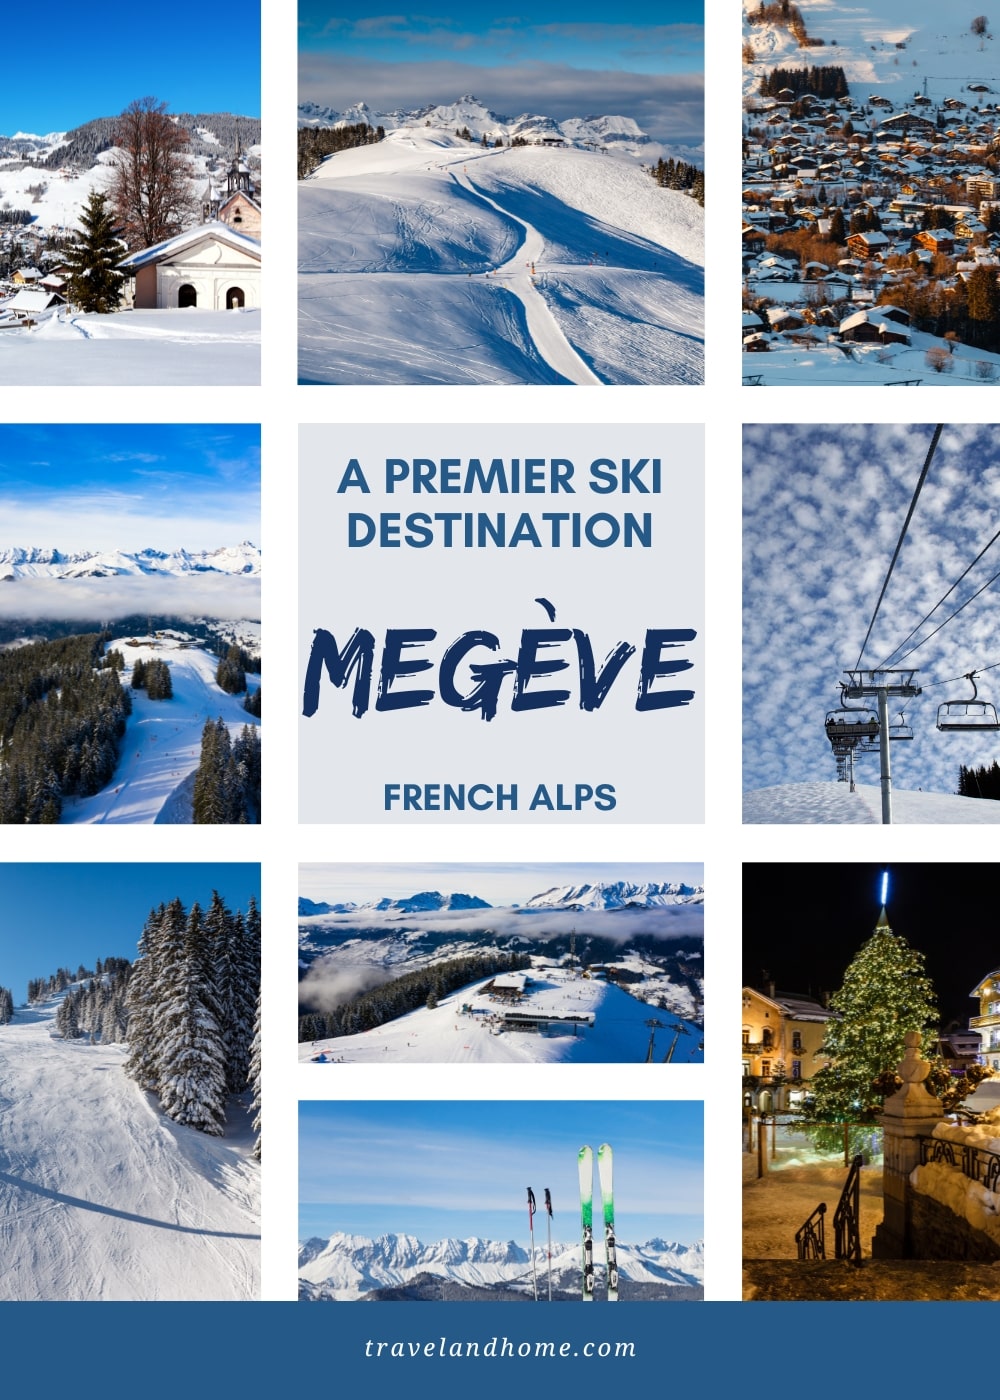 Discover Megève A Premier Ski Destination in France min